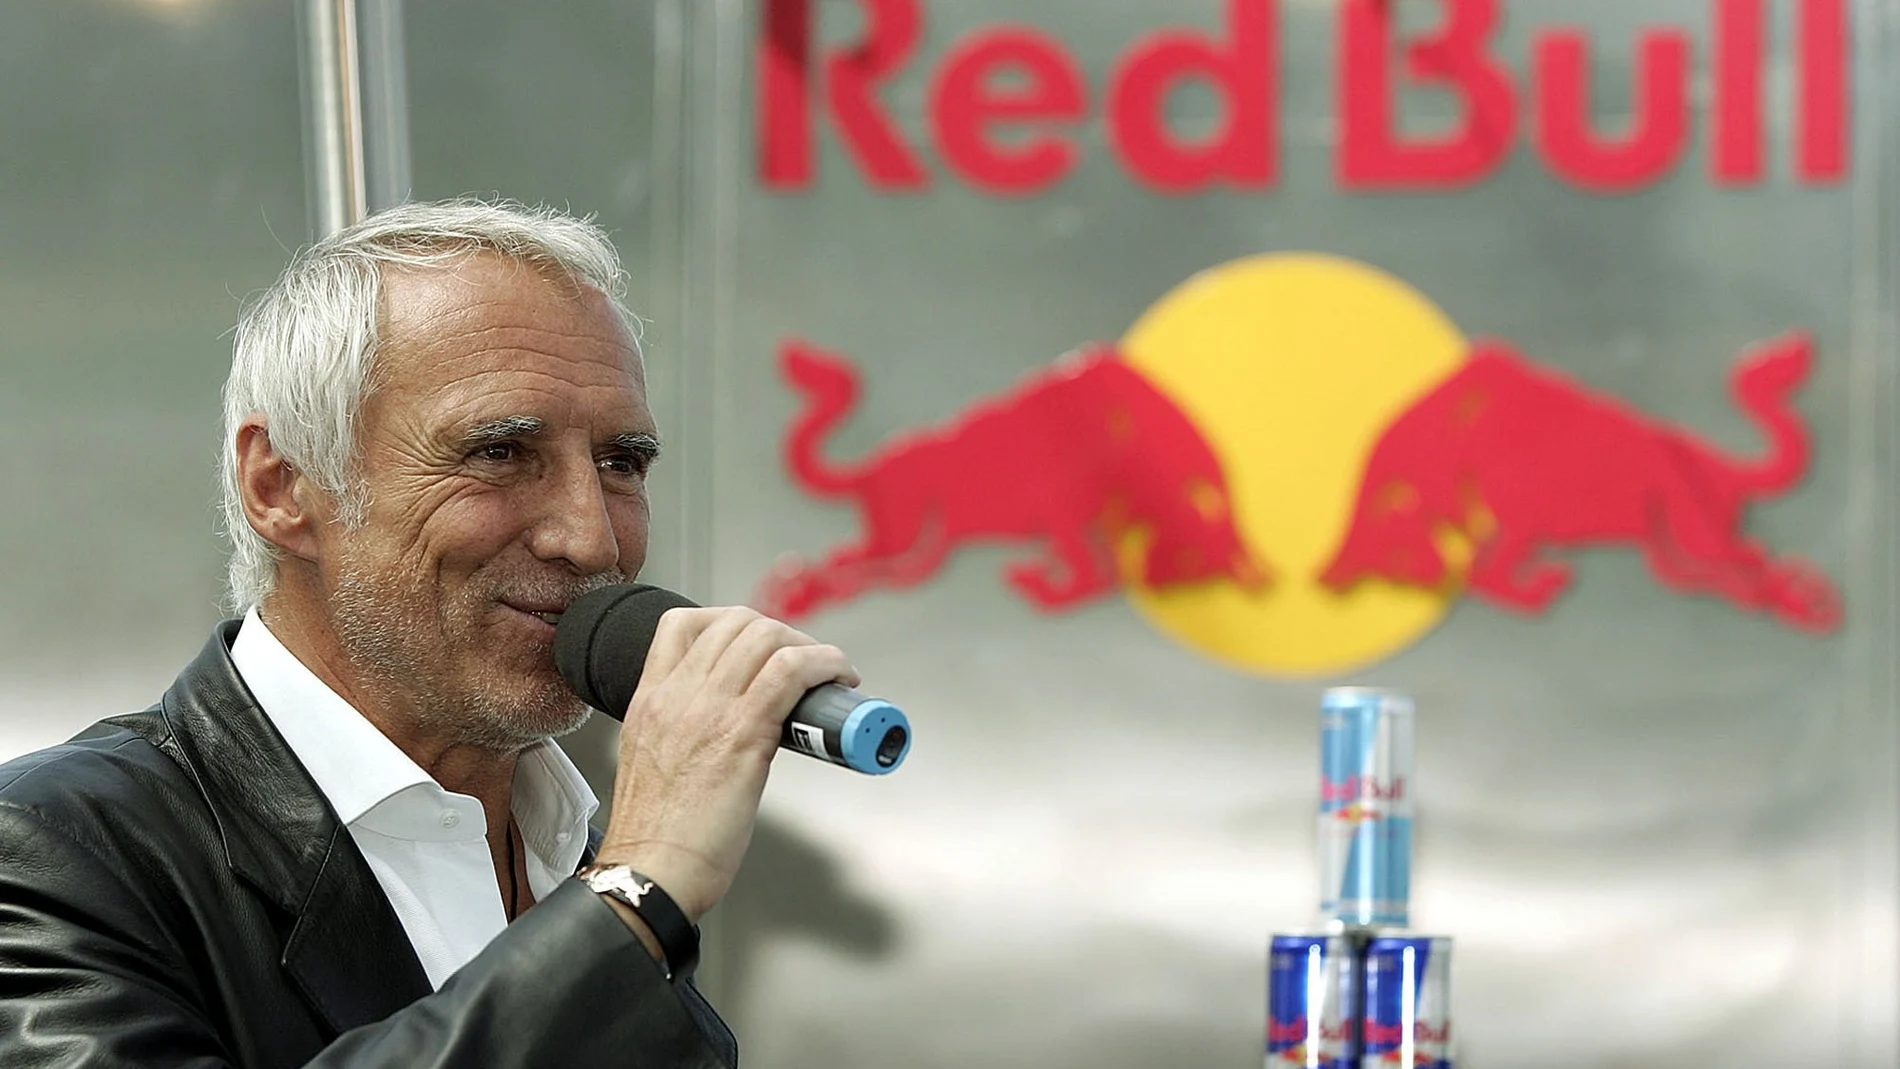 Dietrich Mateschitz, fundador de Red Bull, ha fallecido con 78 años